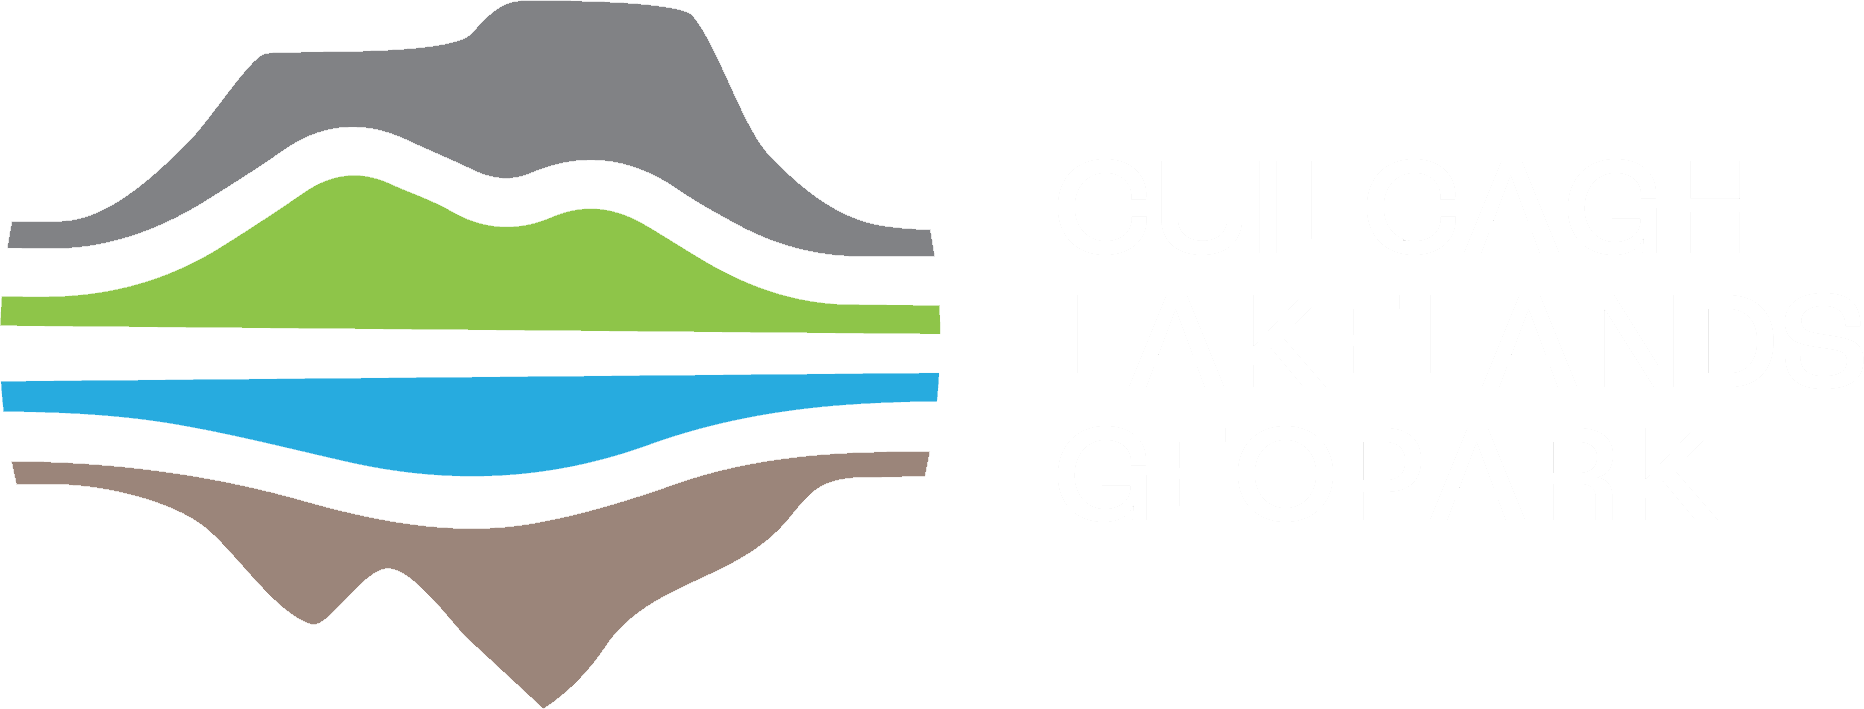 geo park logo